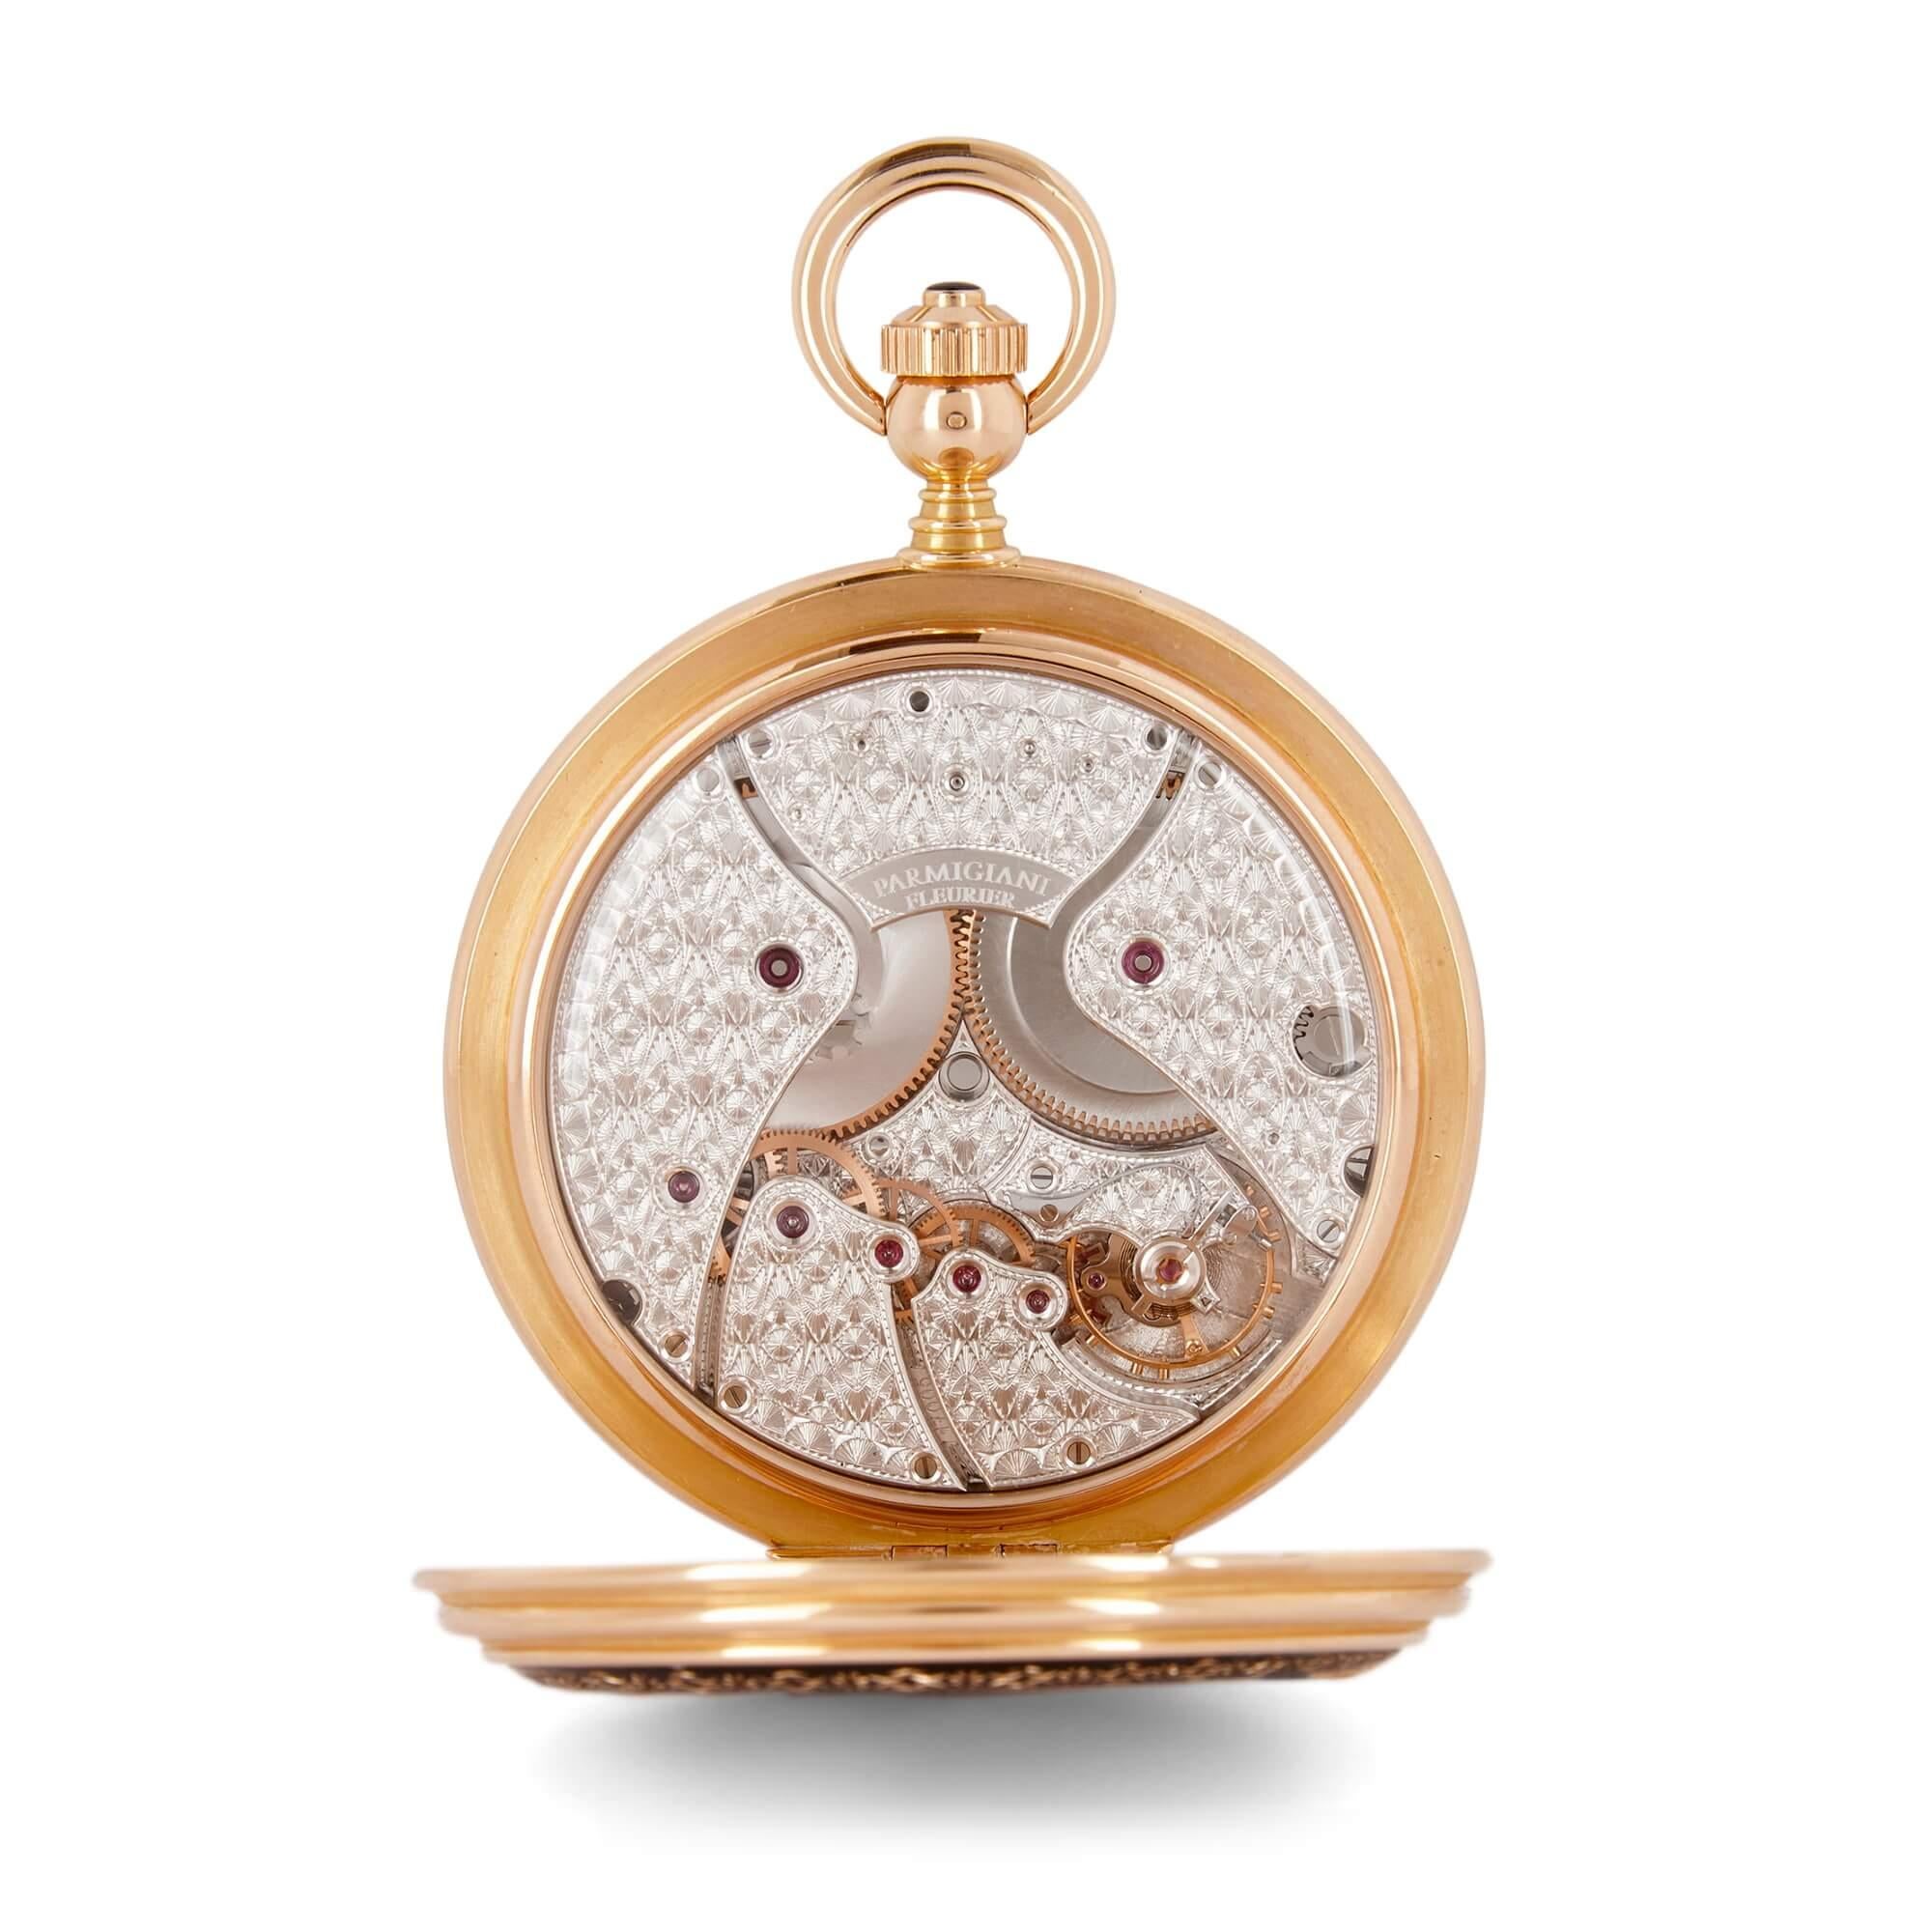 Egyptian Revival Parmigiani Fleurier, 'Nubia', Extremely Fine, Unique 18k Pink Gold Pocket Watch For Sale